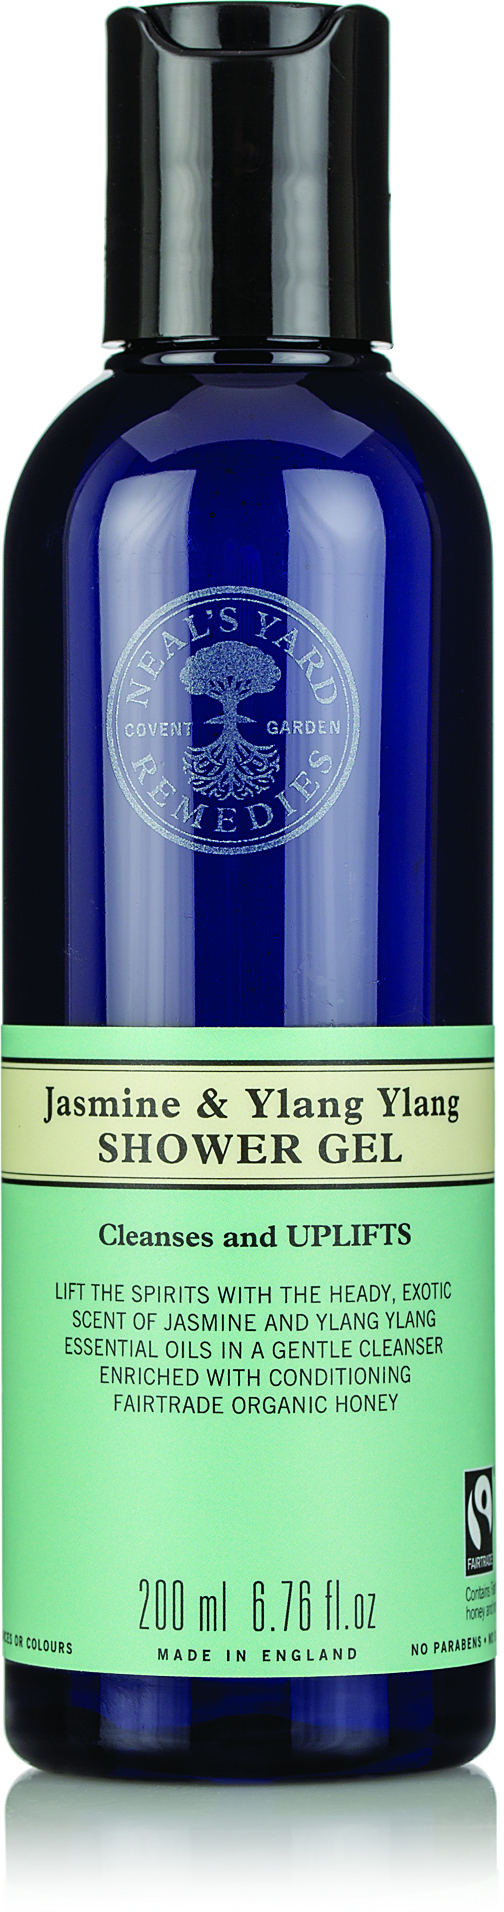 Neal’s Yard Remedies Jasmine Shower Gel 200ml